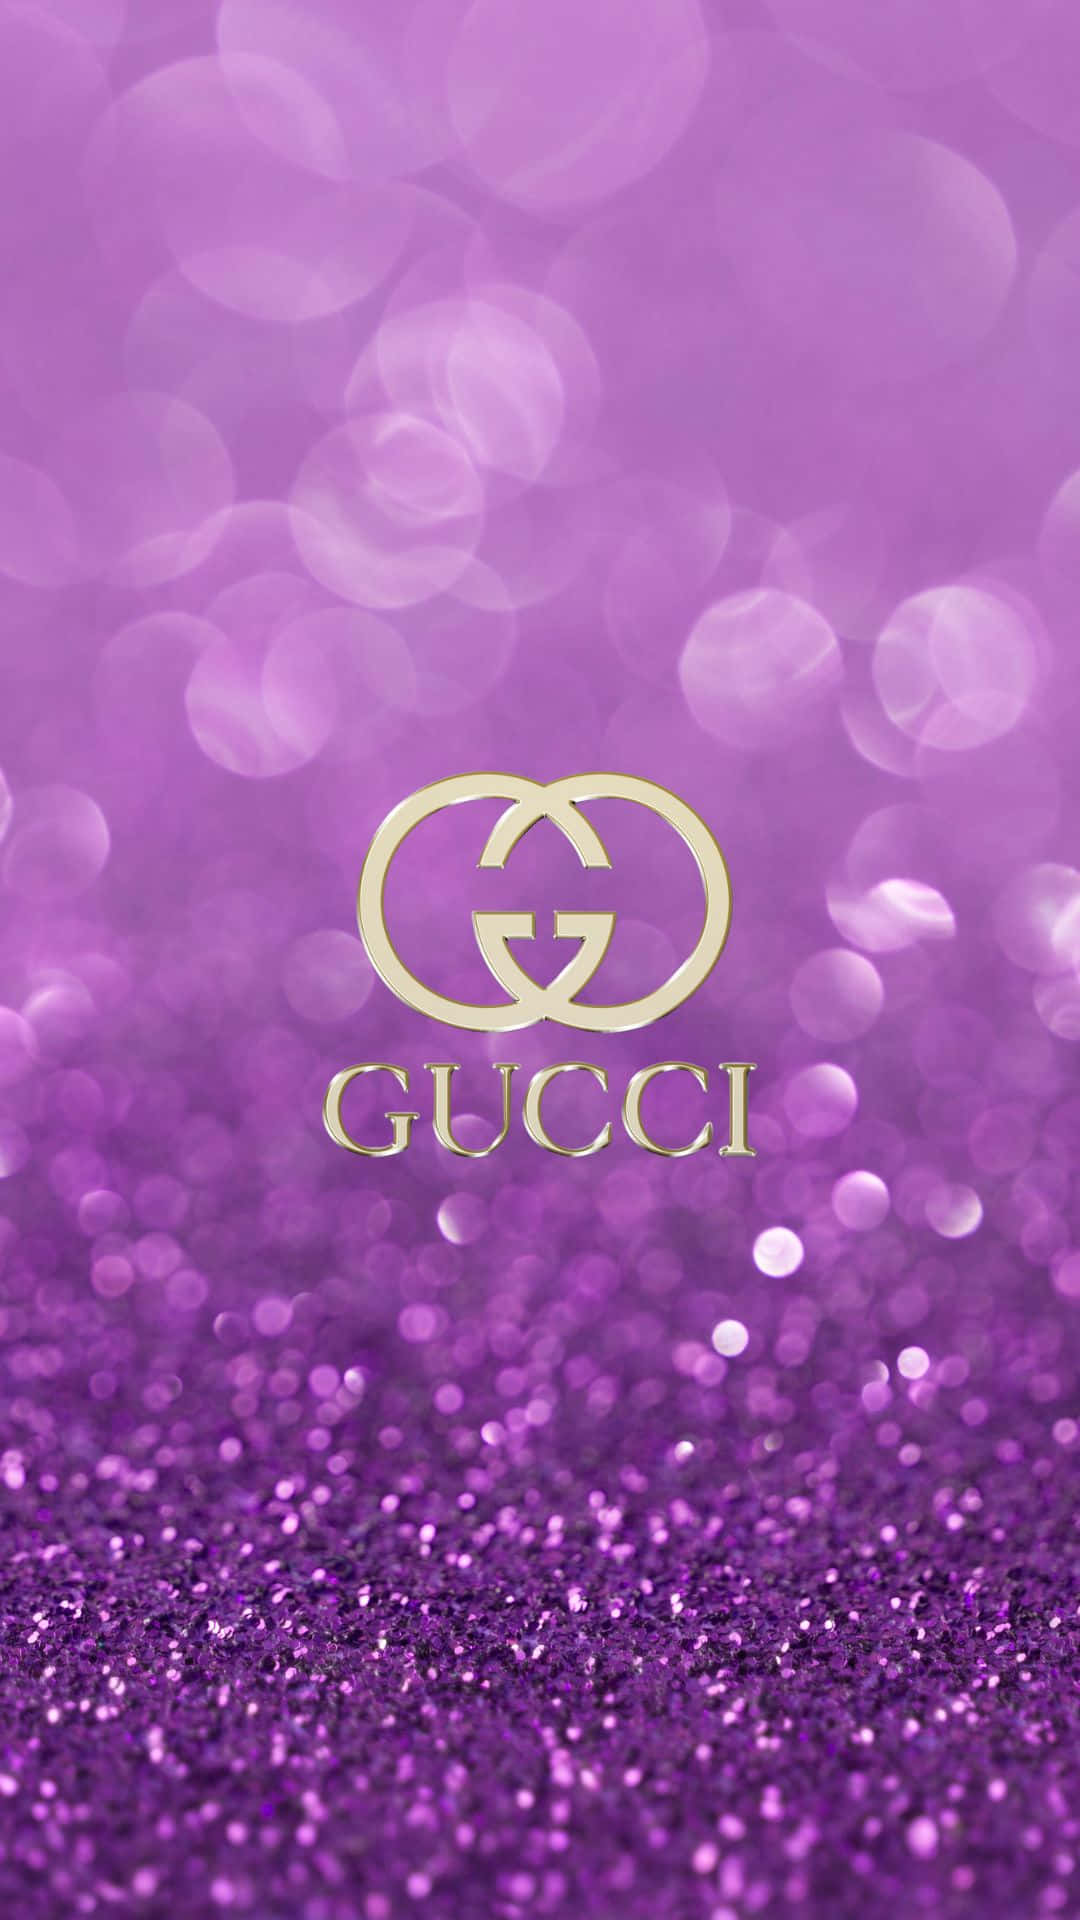 Gucci Logo On Purple Glitter Background Wallpaper